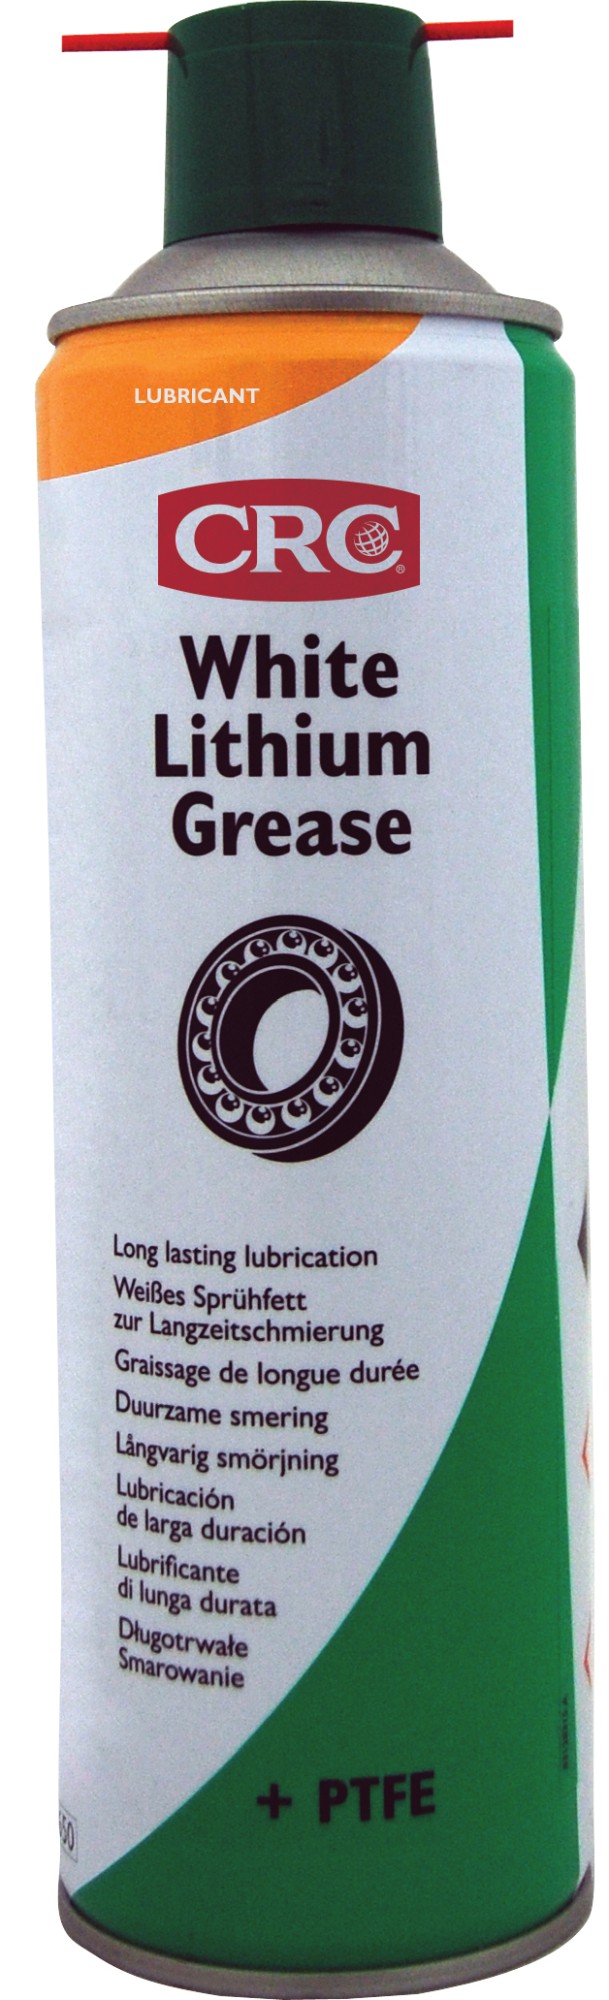 Grasa blanca en spray lubricación de larga duración de maquinaria.